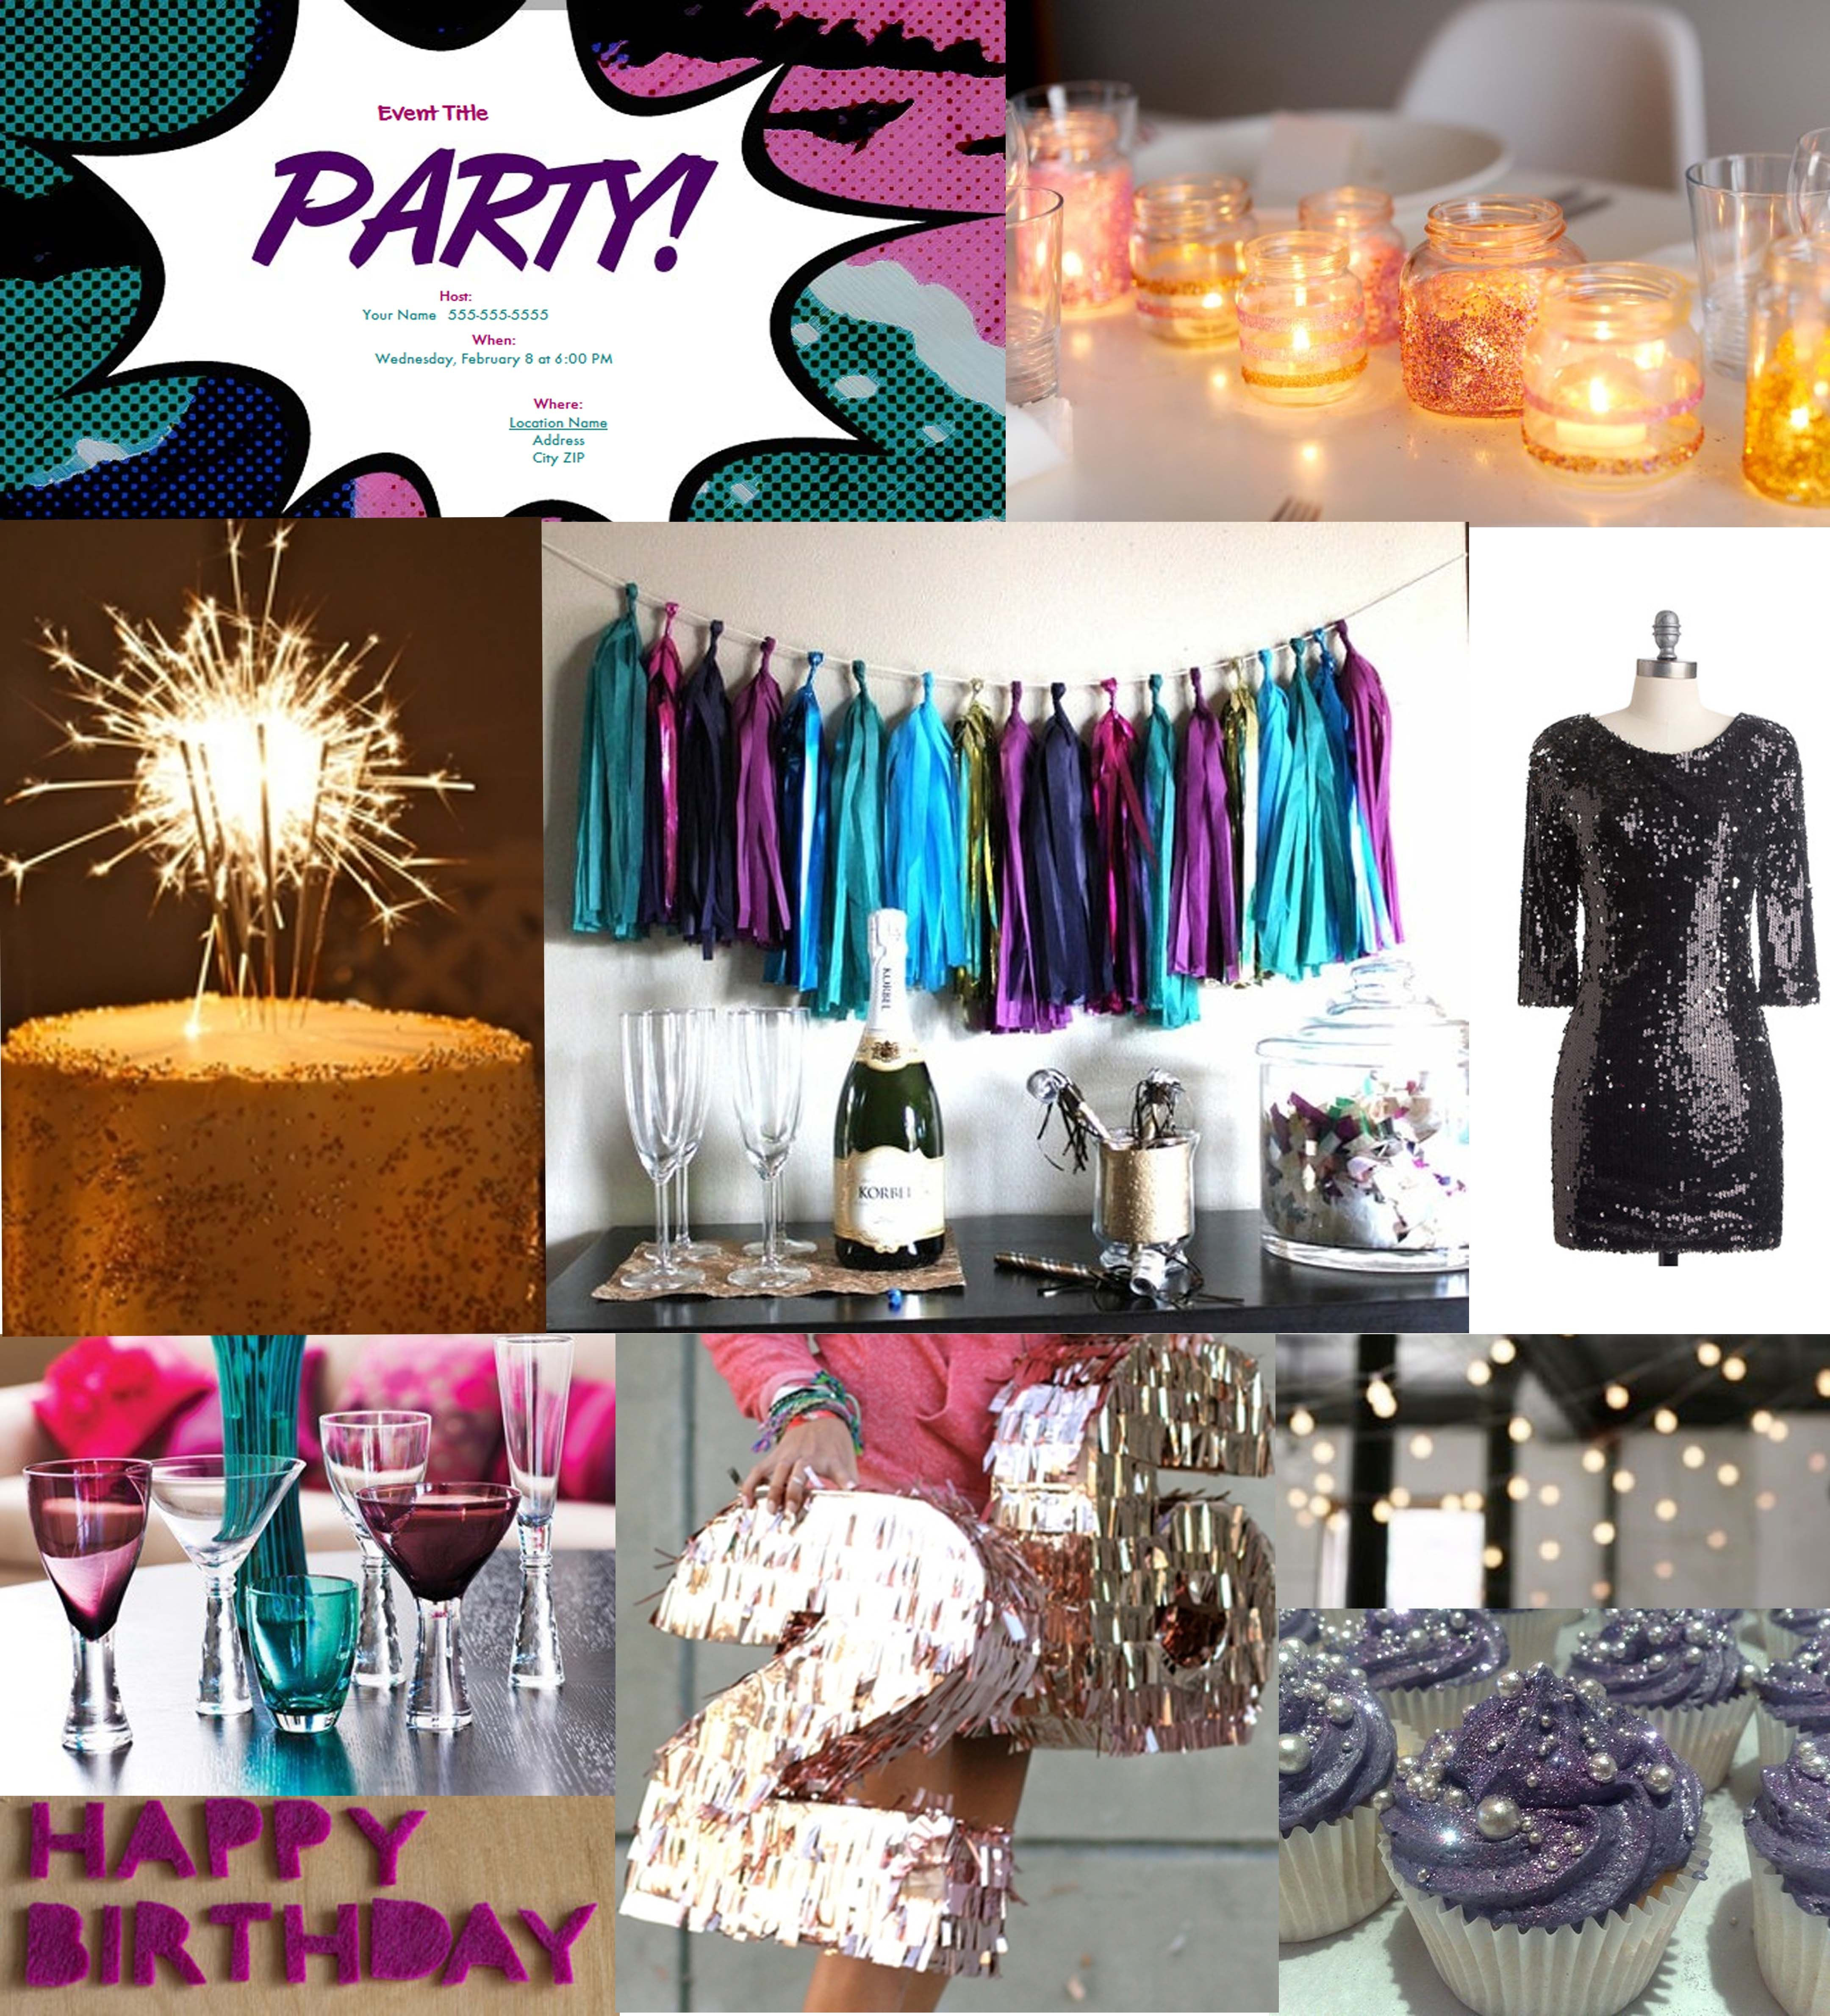 Best ideas about Birthday Party Ideas Adults
. Save or Pin adult birthday party ideas Google Search 40 yas gunu Now.